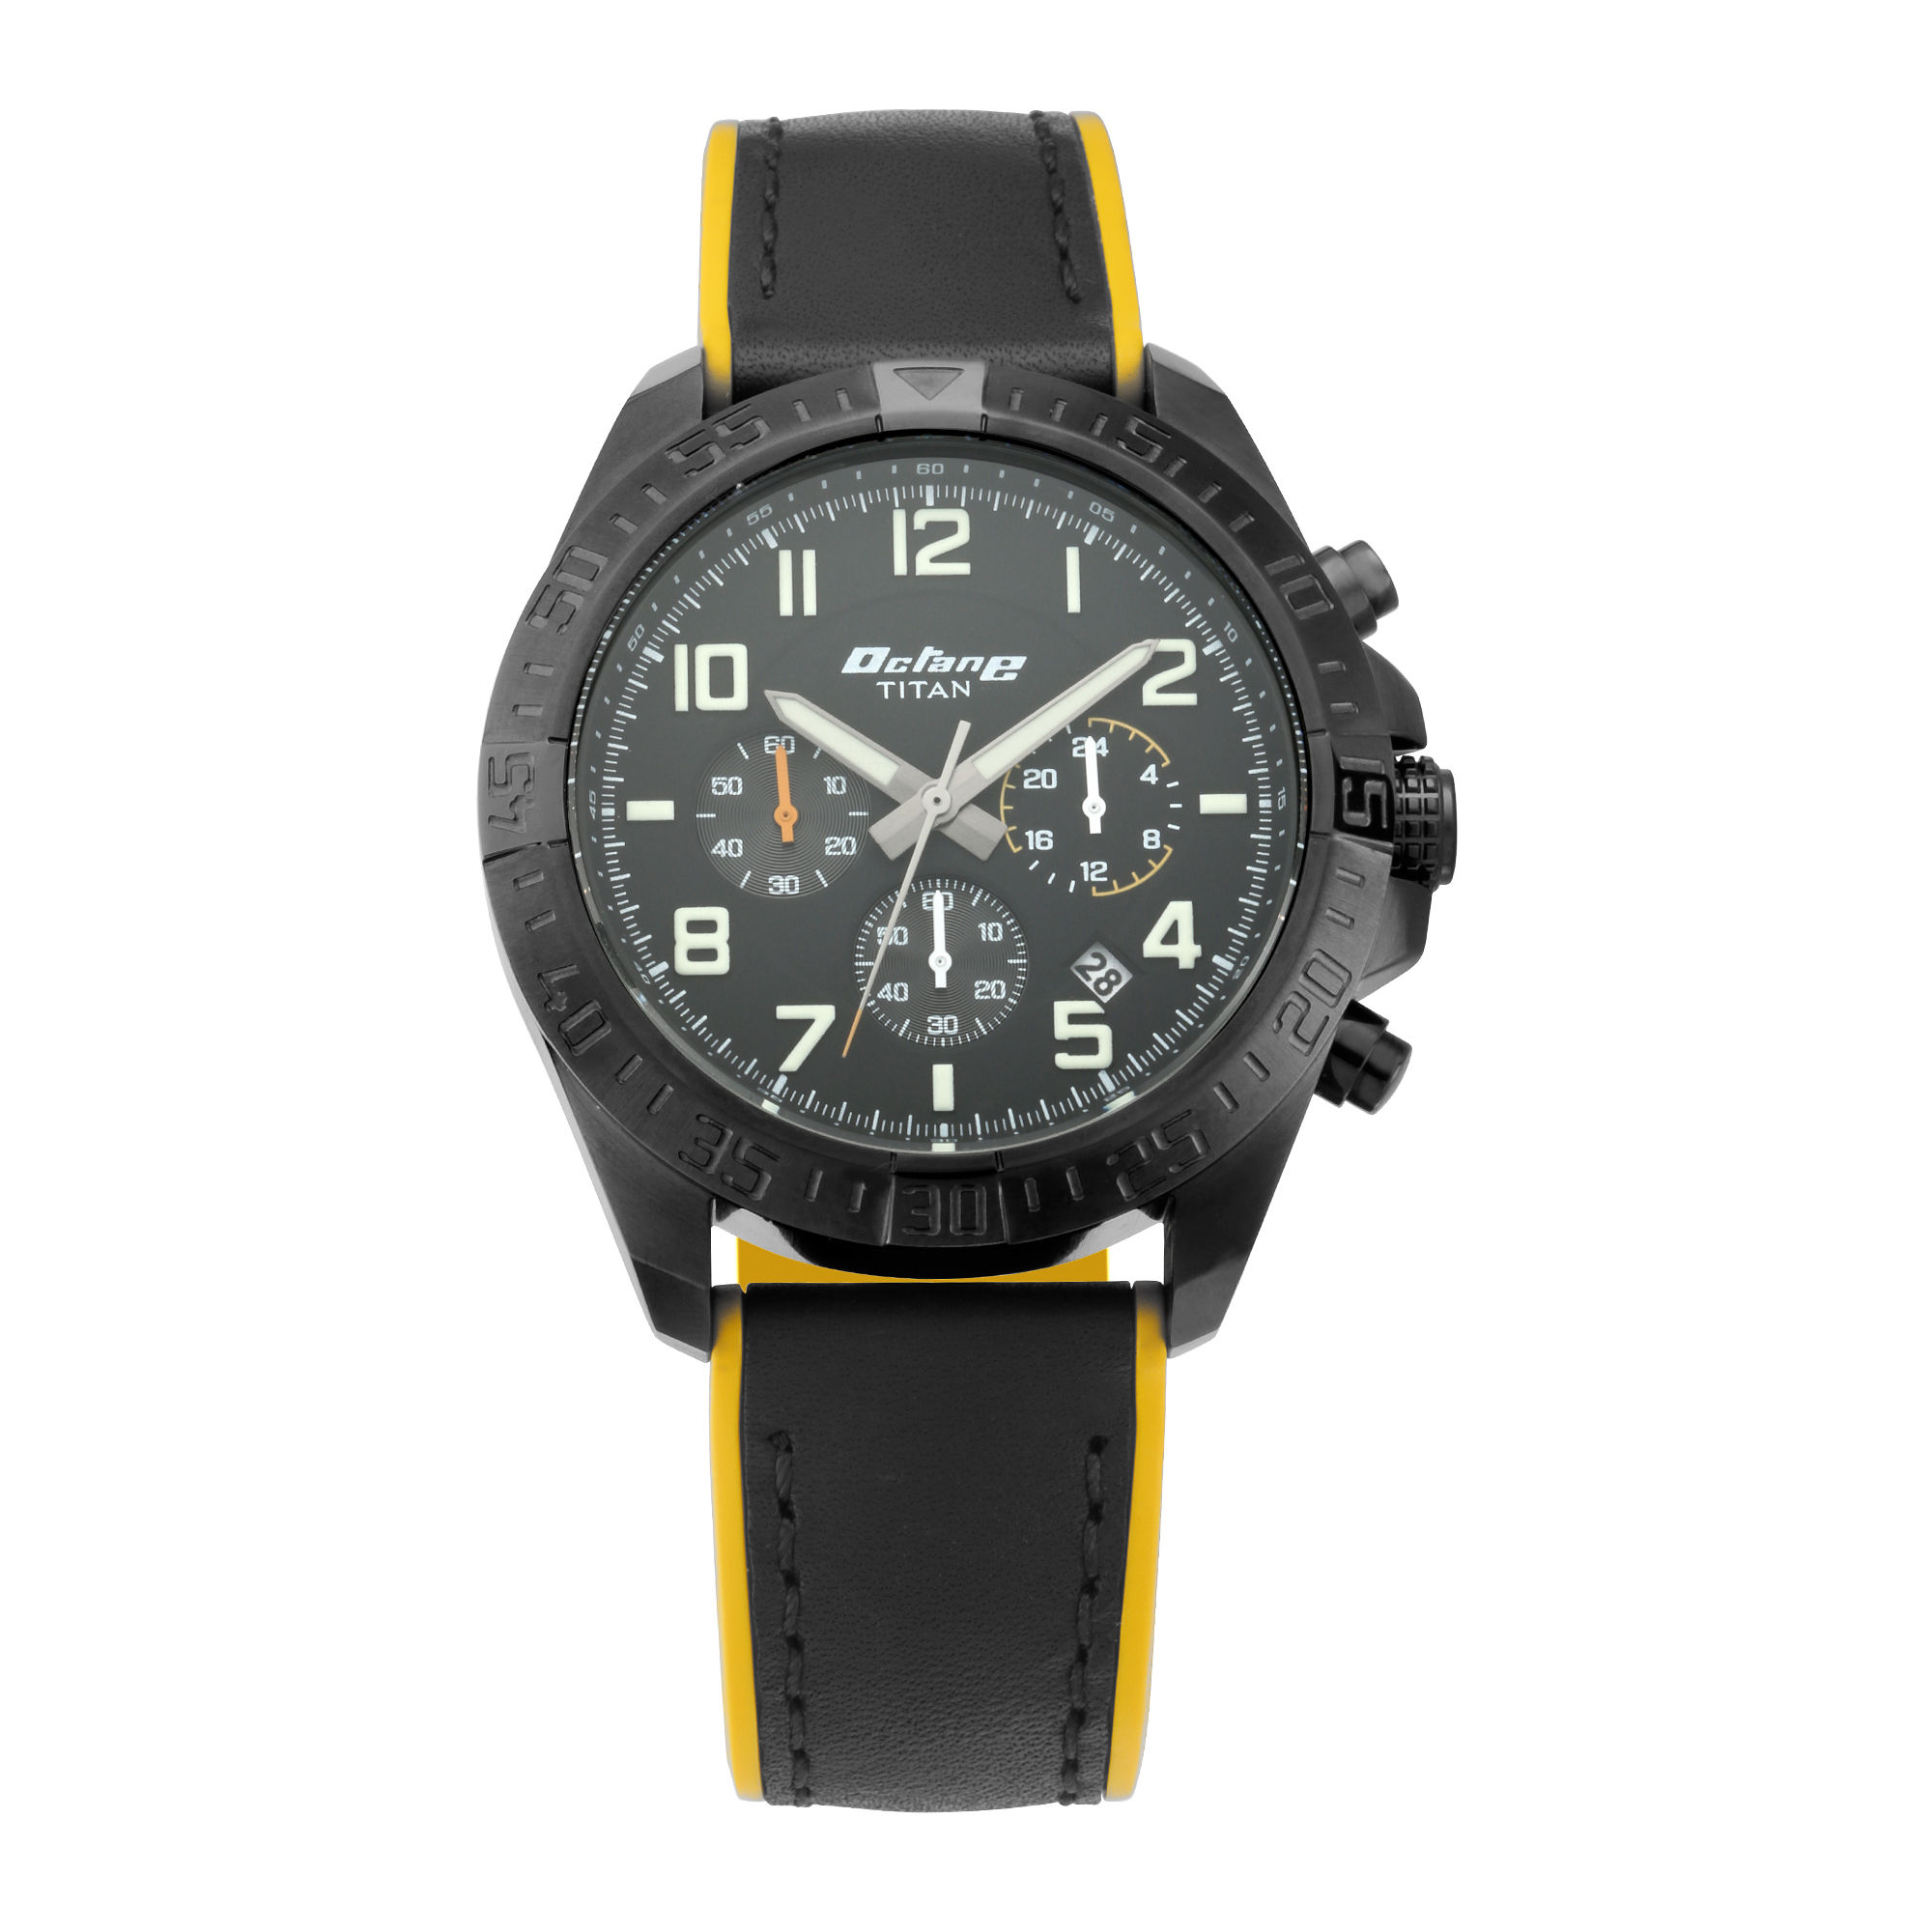 Titan Octane Analog Silver Dial Men's Watch-NL90087KM01/NP90087KM01 |  Analog watch, Watches for men, Casual black